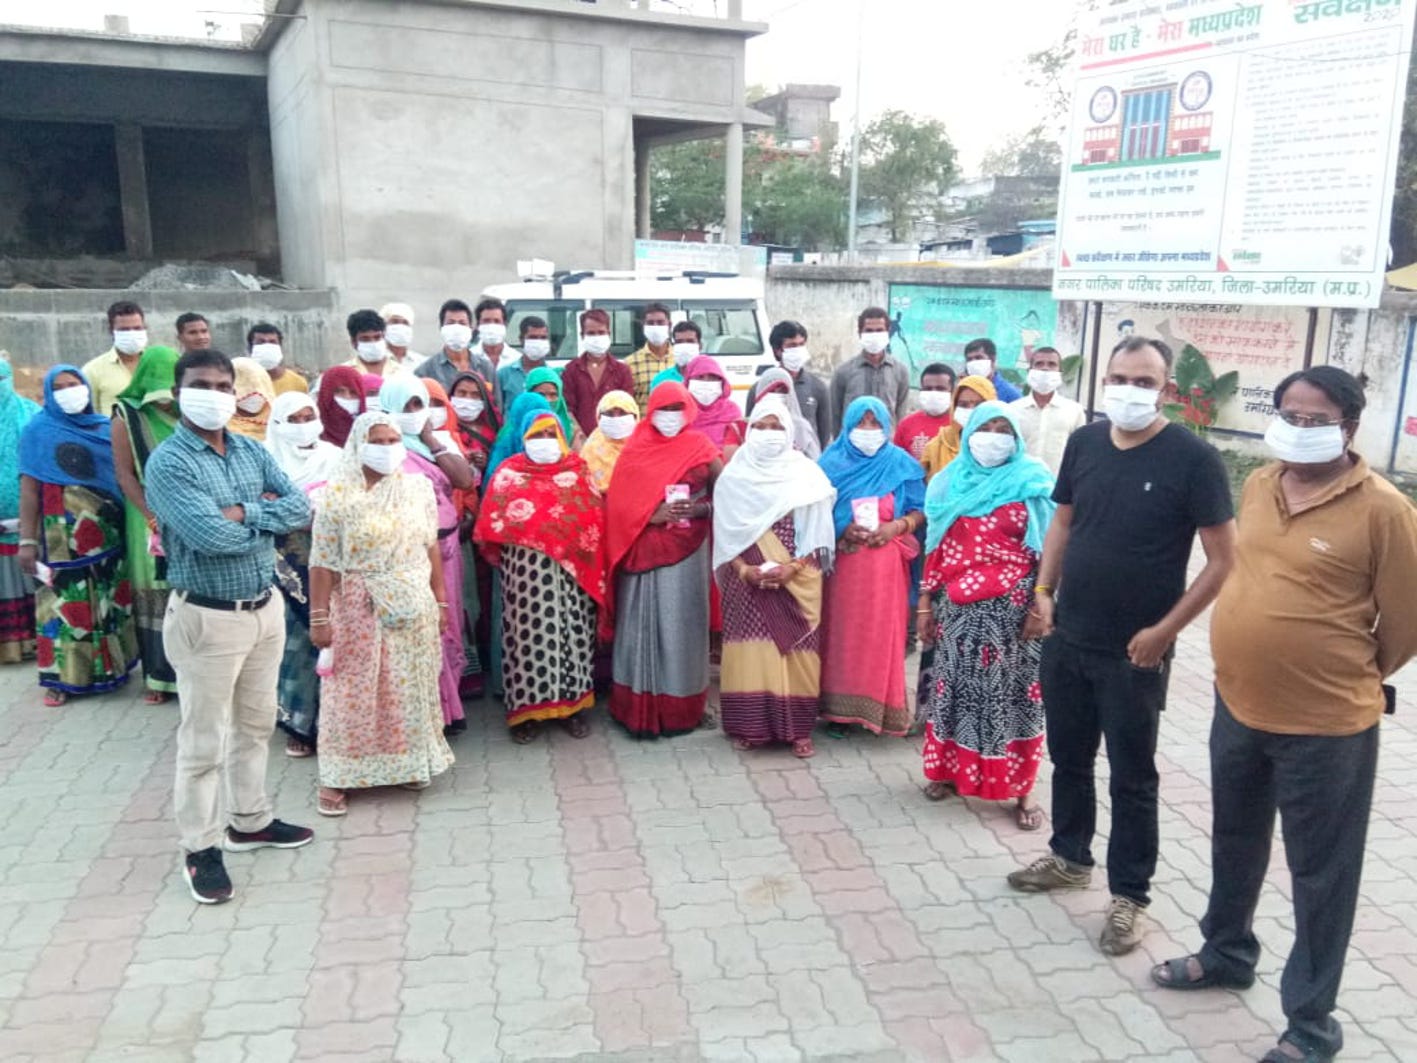 Vigilance: Municipal distributes masks and sanitizers